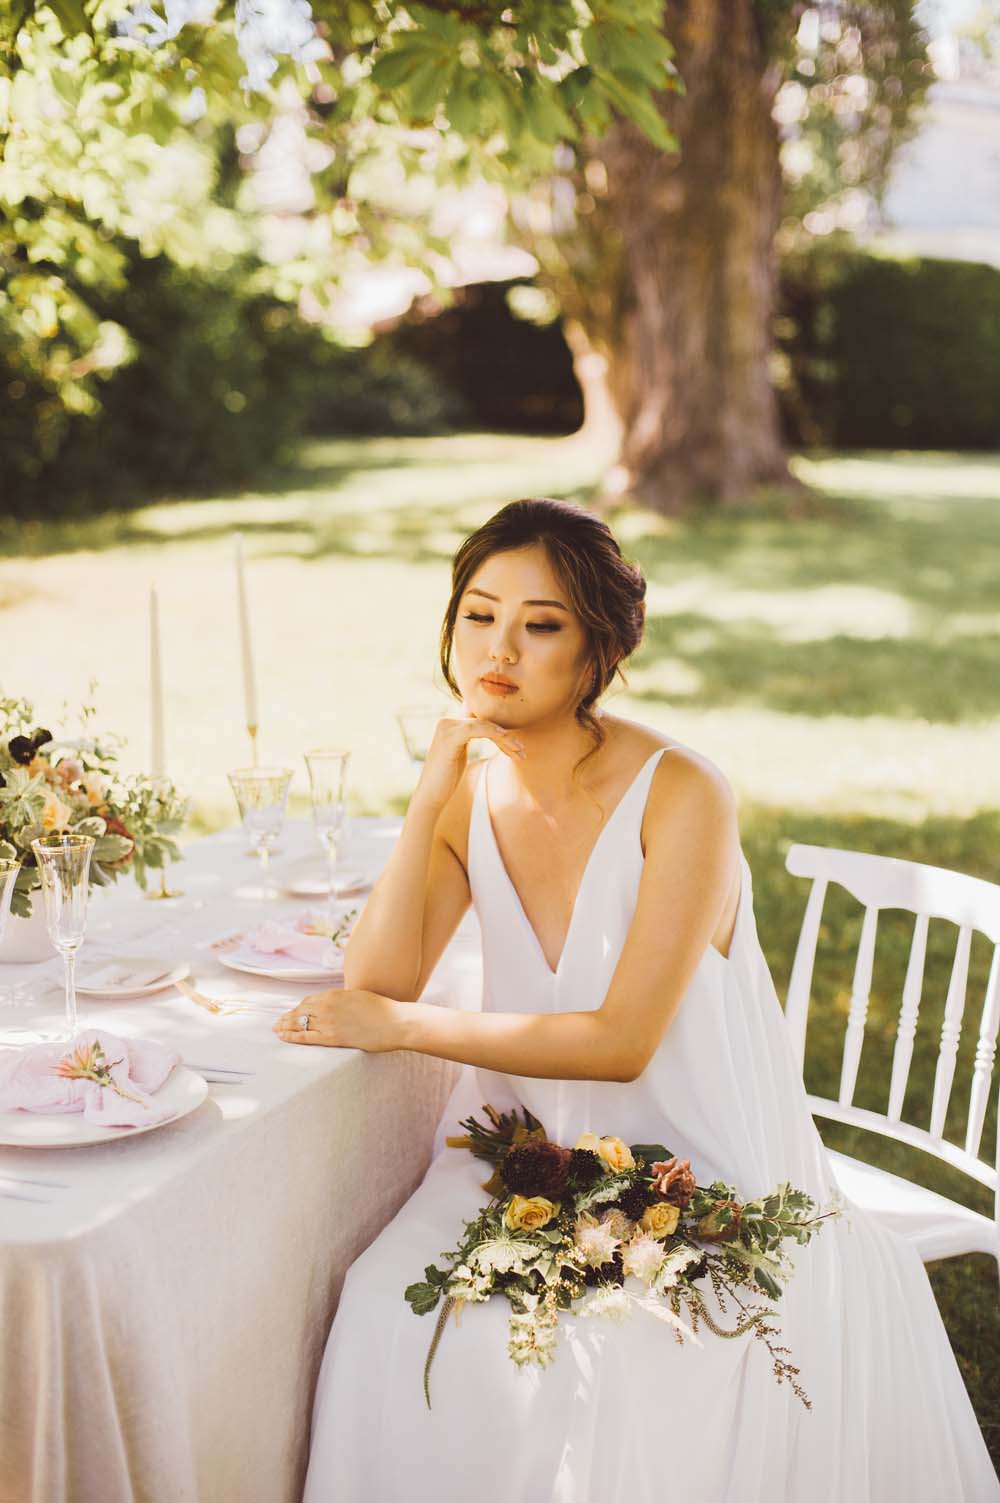 Modern Autumn Botanical Wedding Inspo - Bride sitting at table